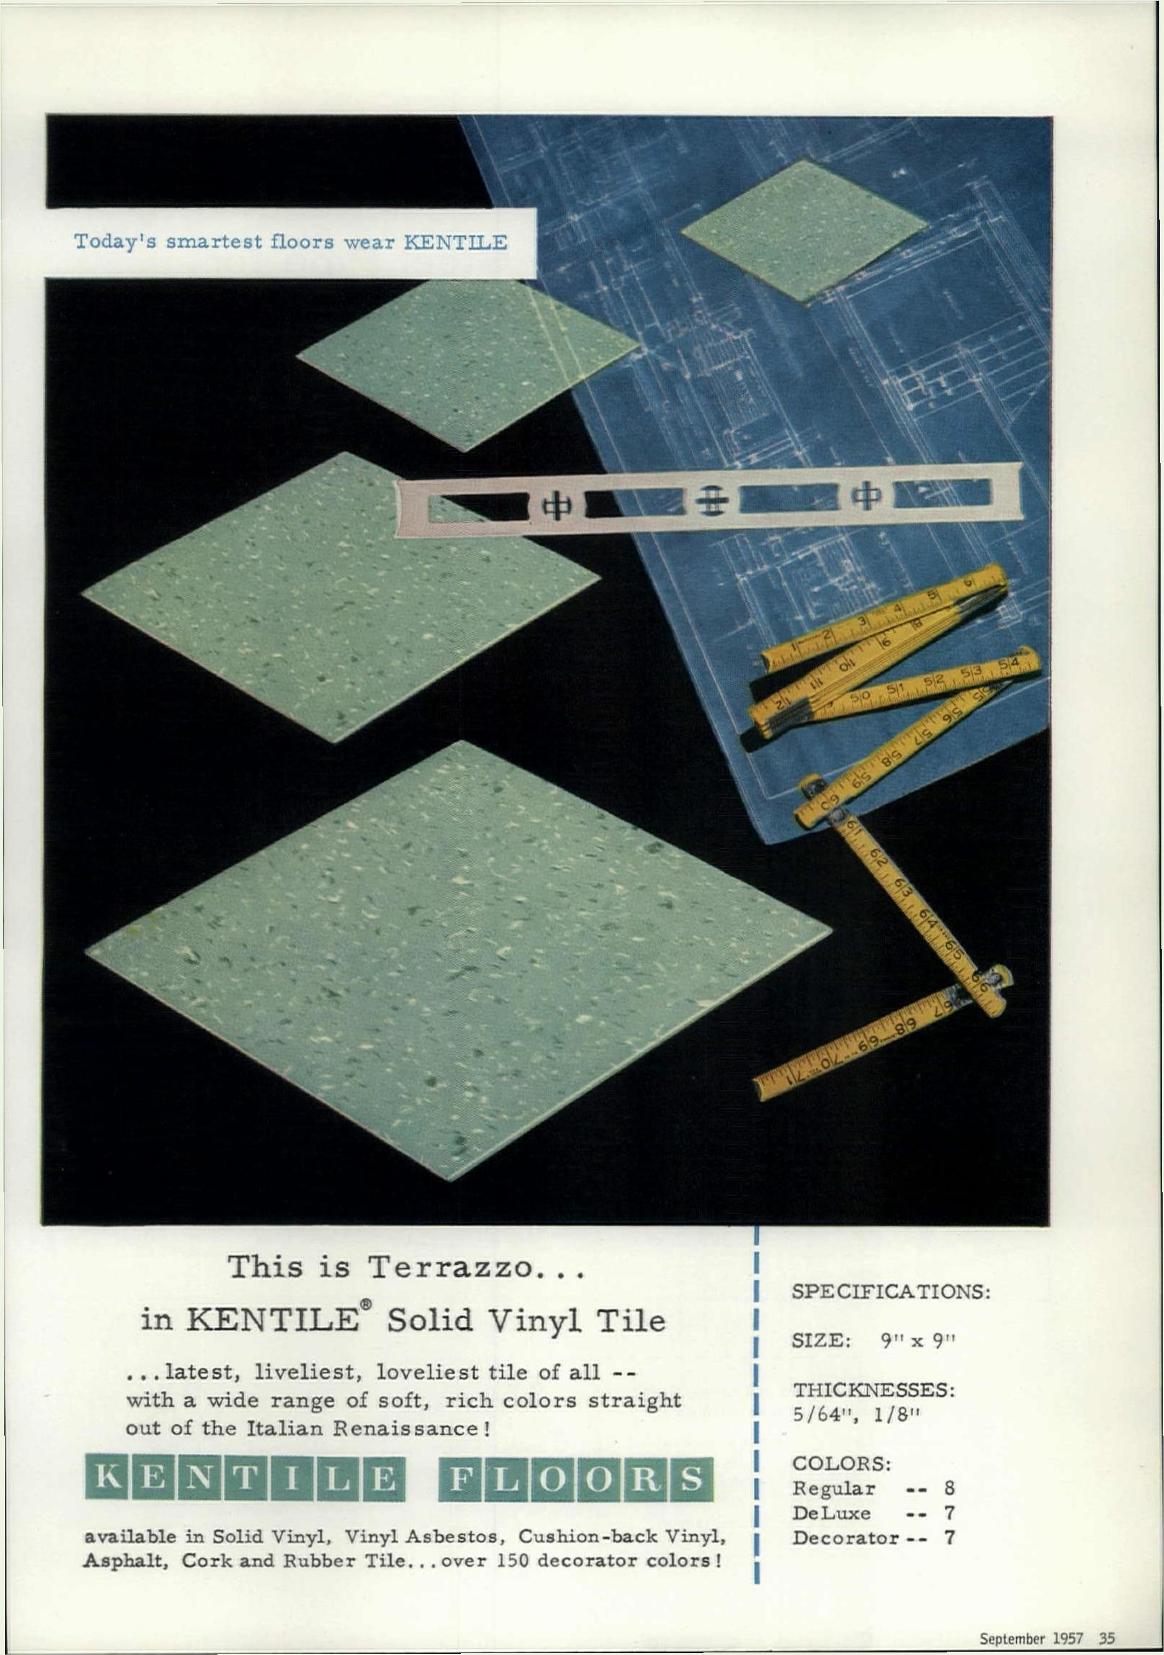 Advertising Kentile Floor on Progressive Architecture